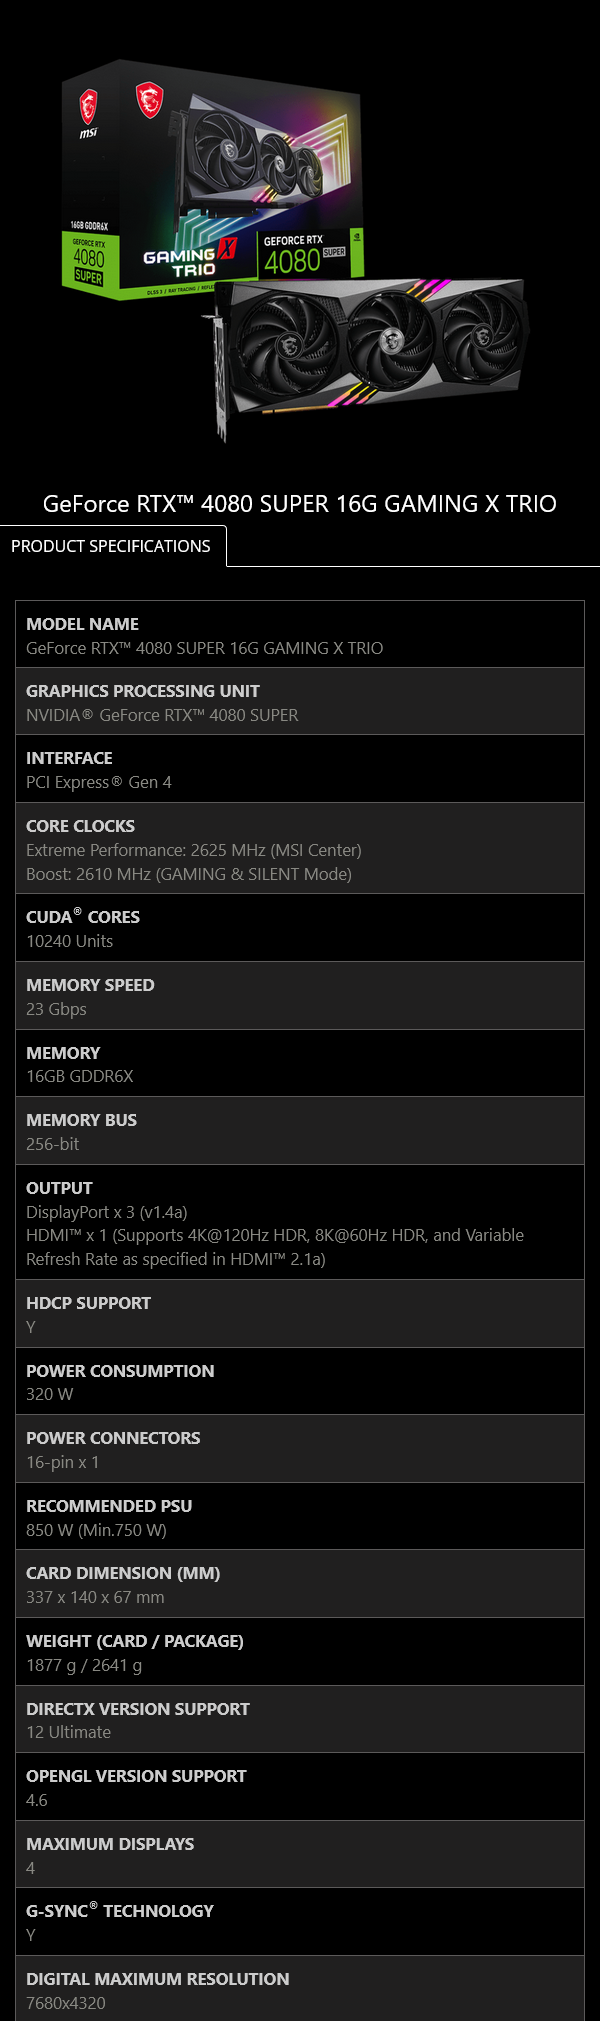 MSI GeForce RTX 4080 SUPER GAMING X TRIO 16G Video Card